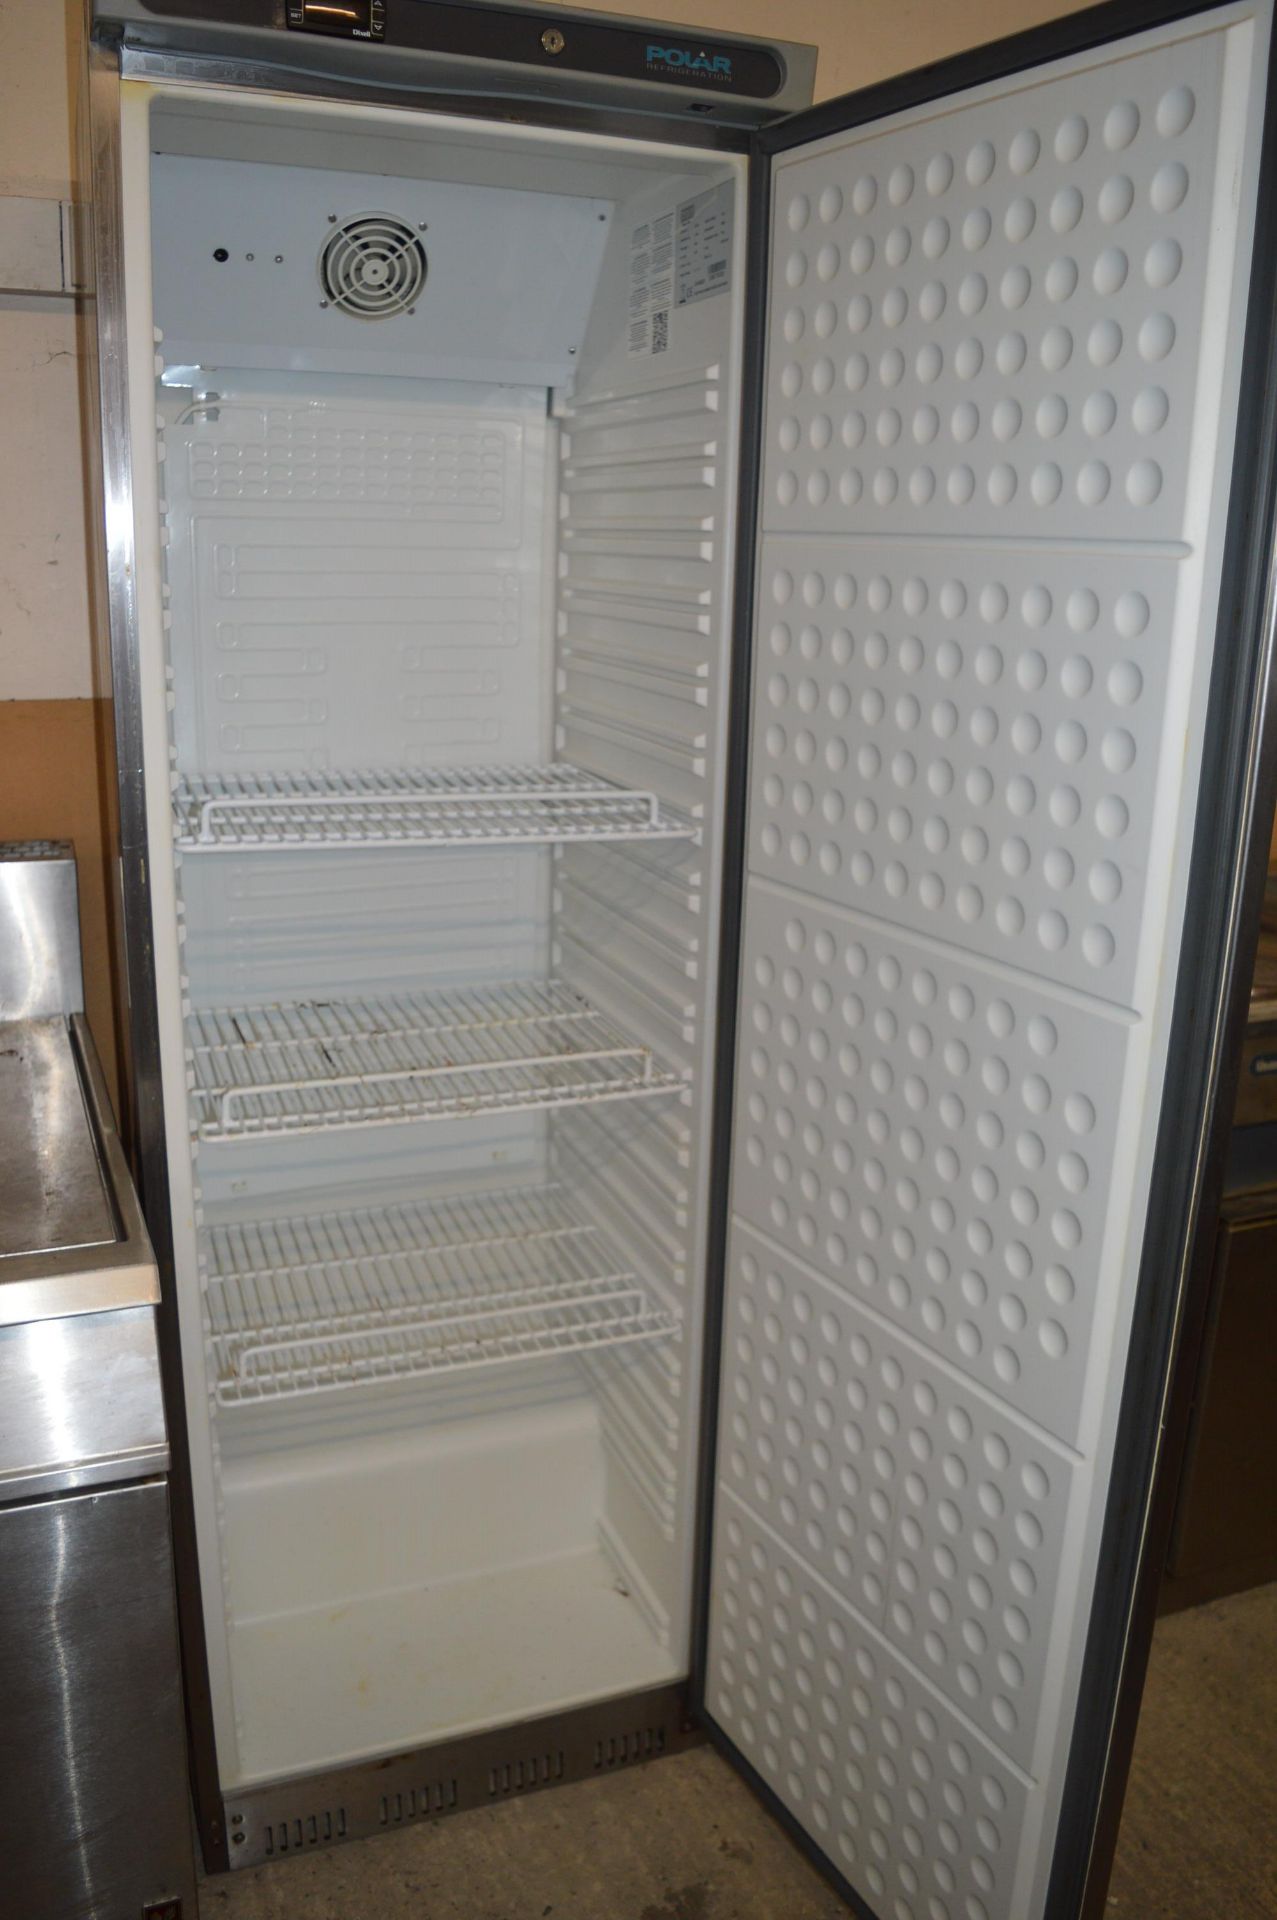 Polar Stainless Steel Upright Refrigerator - Image 2 of 2